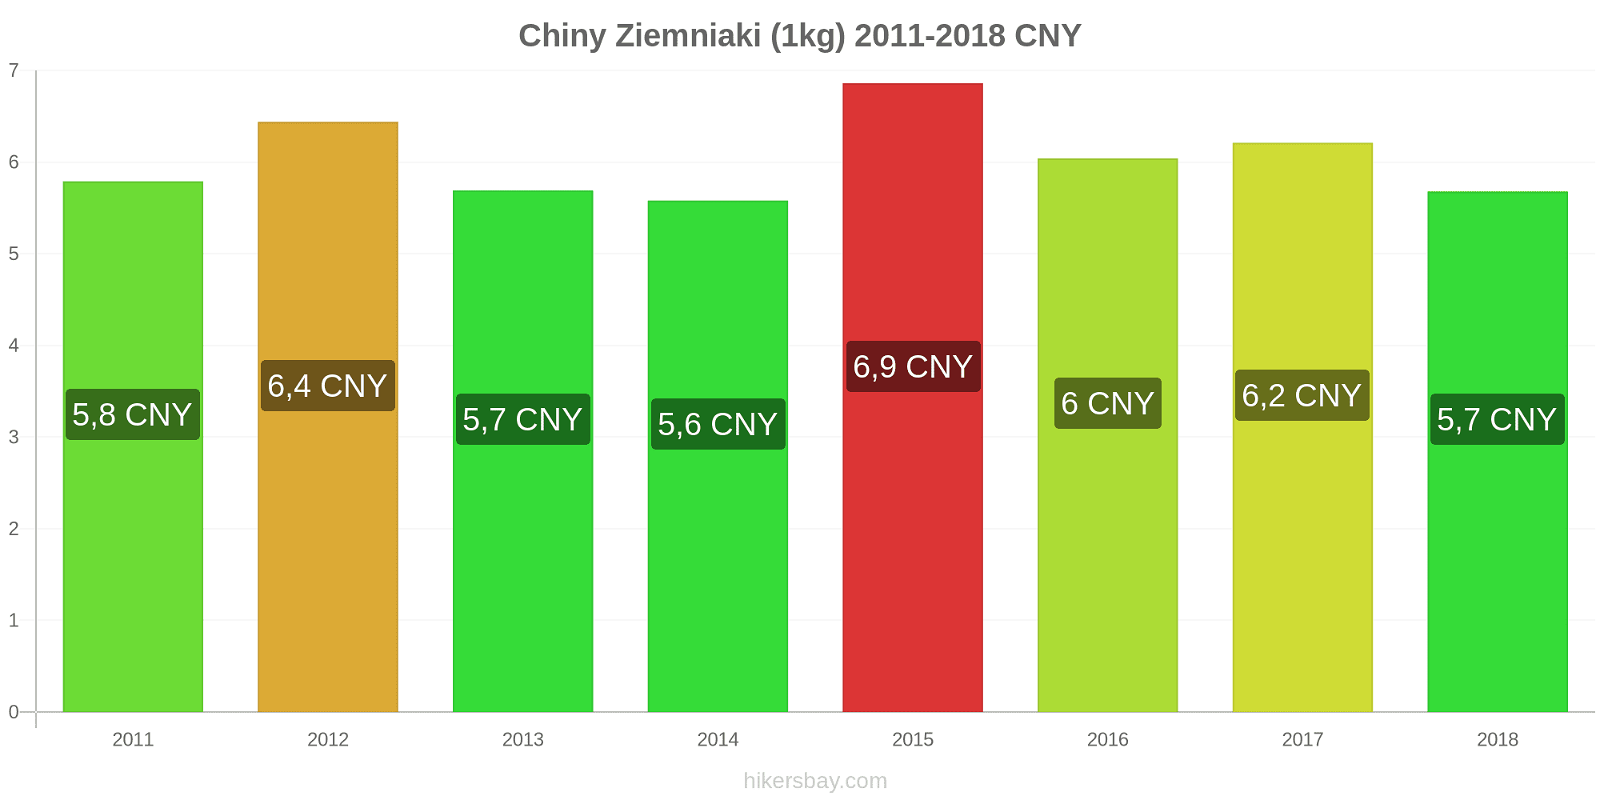 Chiny zmiany cen Ziemniaki (1kg) hikersbay.com